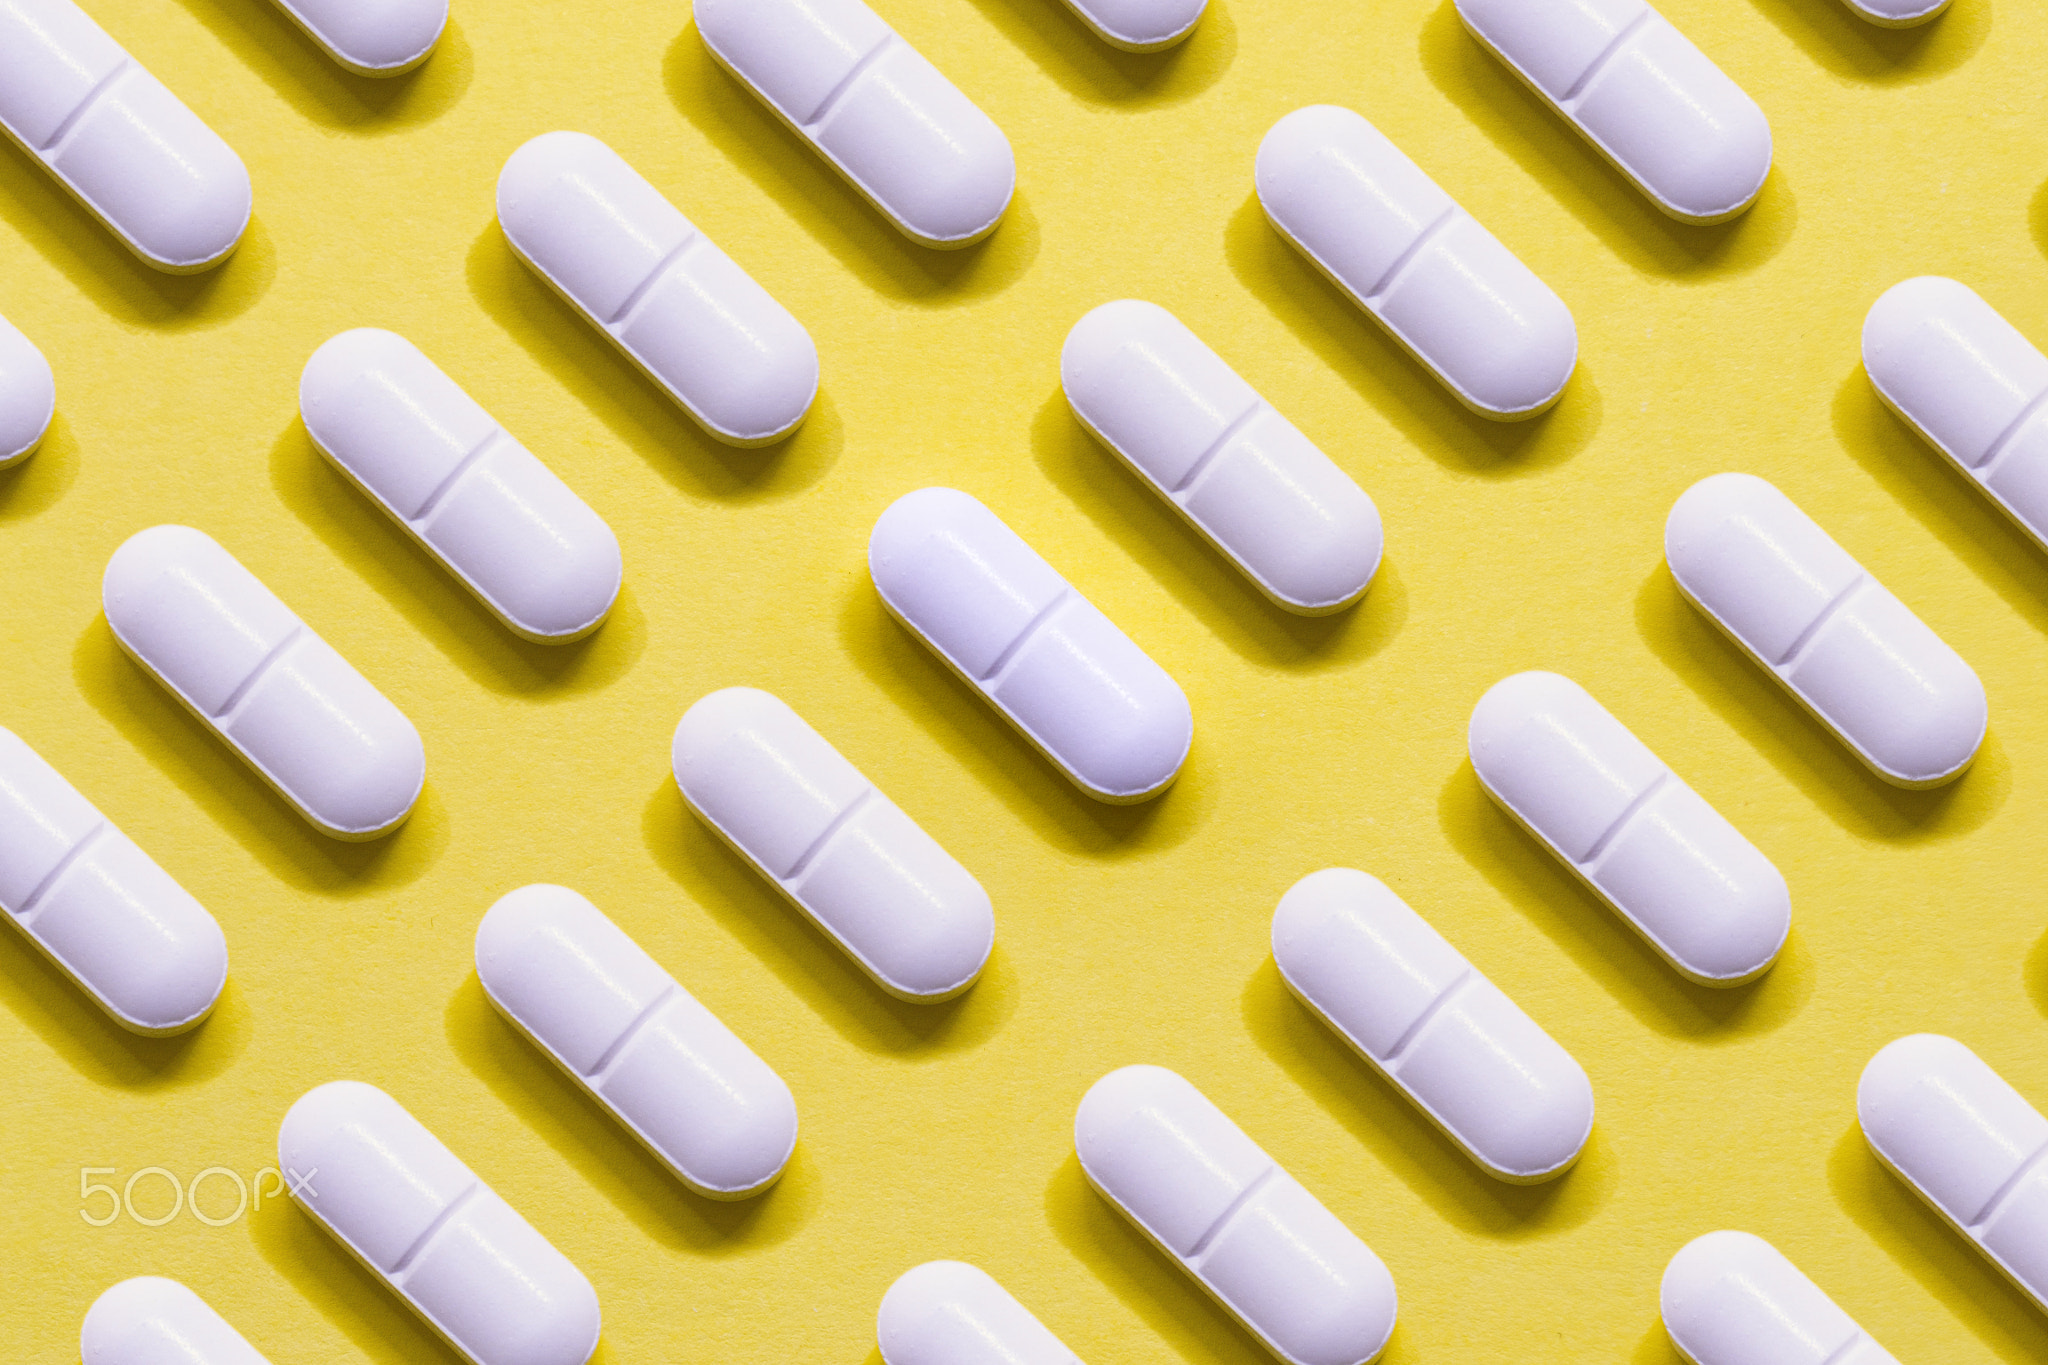 Rows of white pills